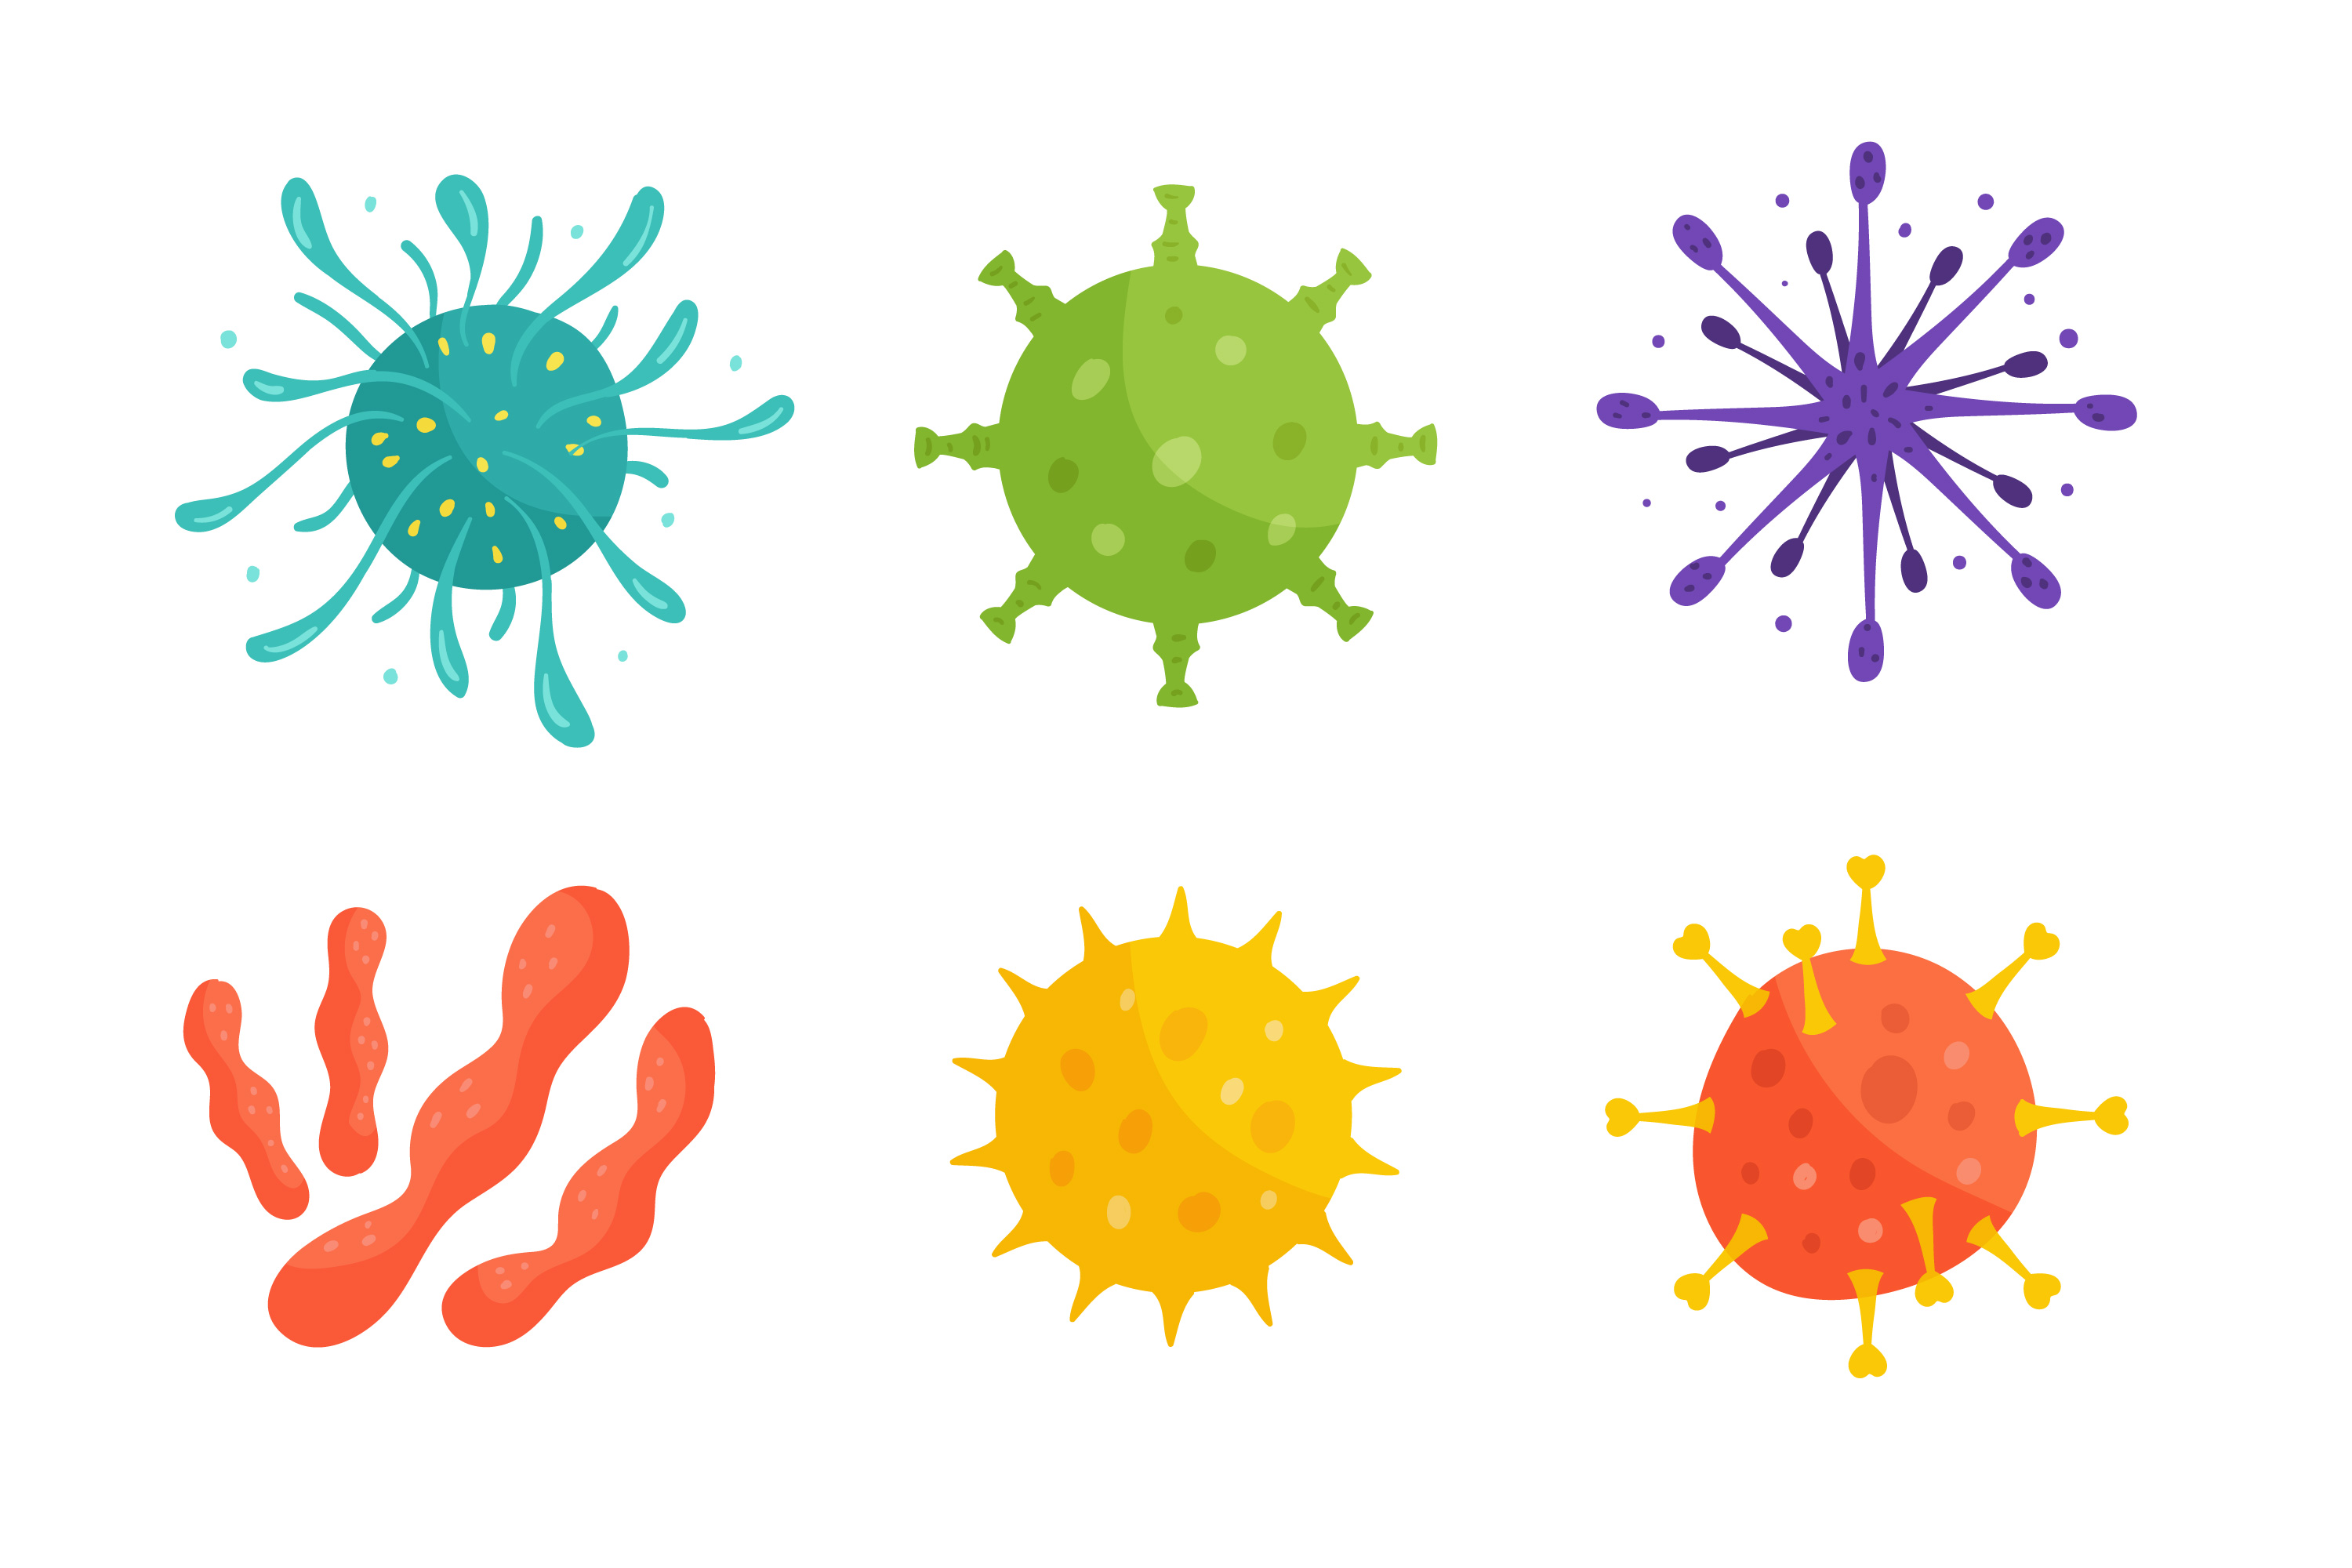 Virus diagrams in different colors